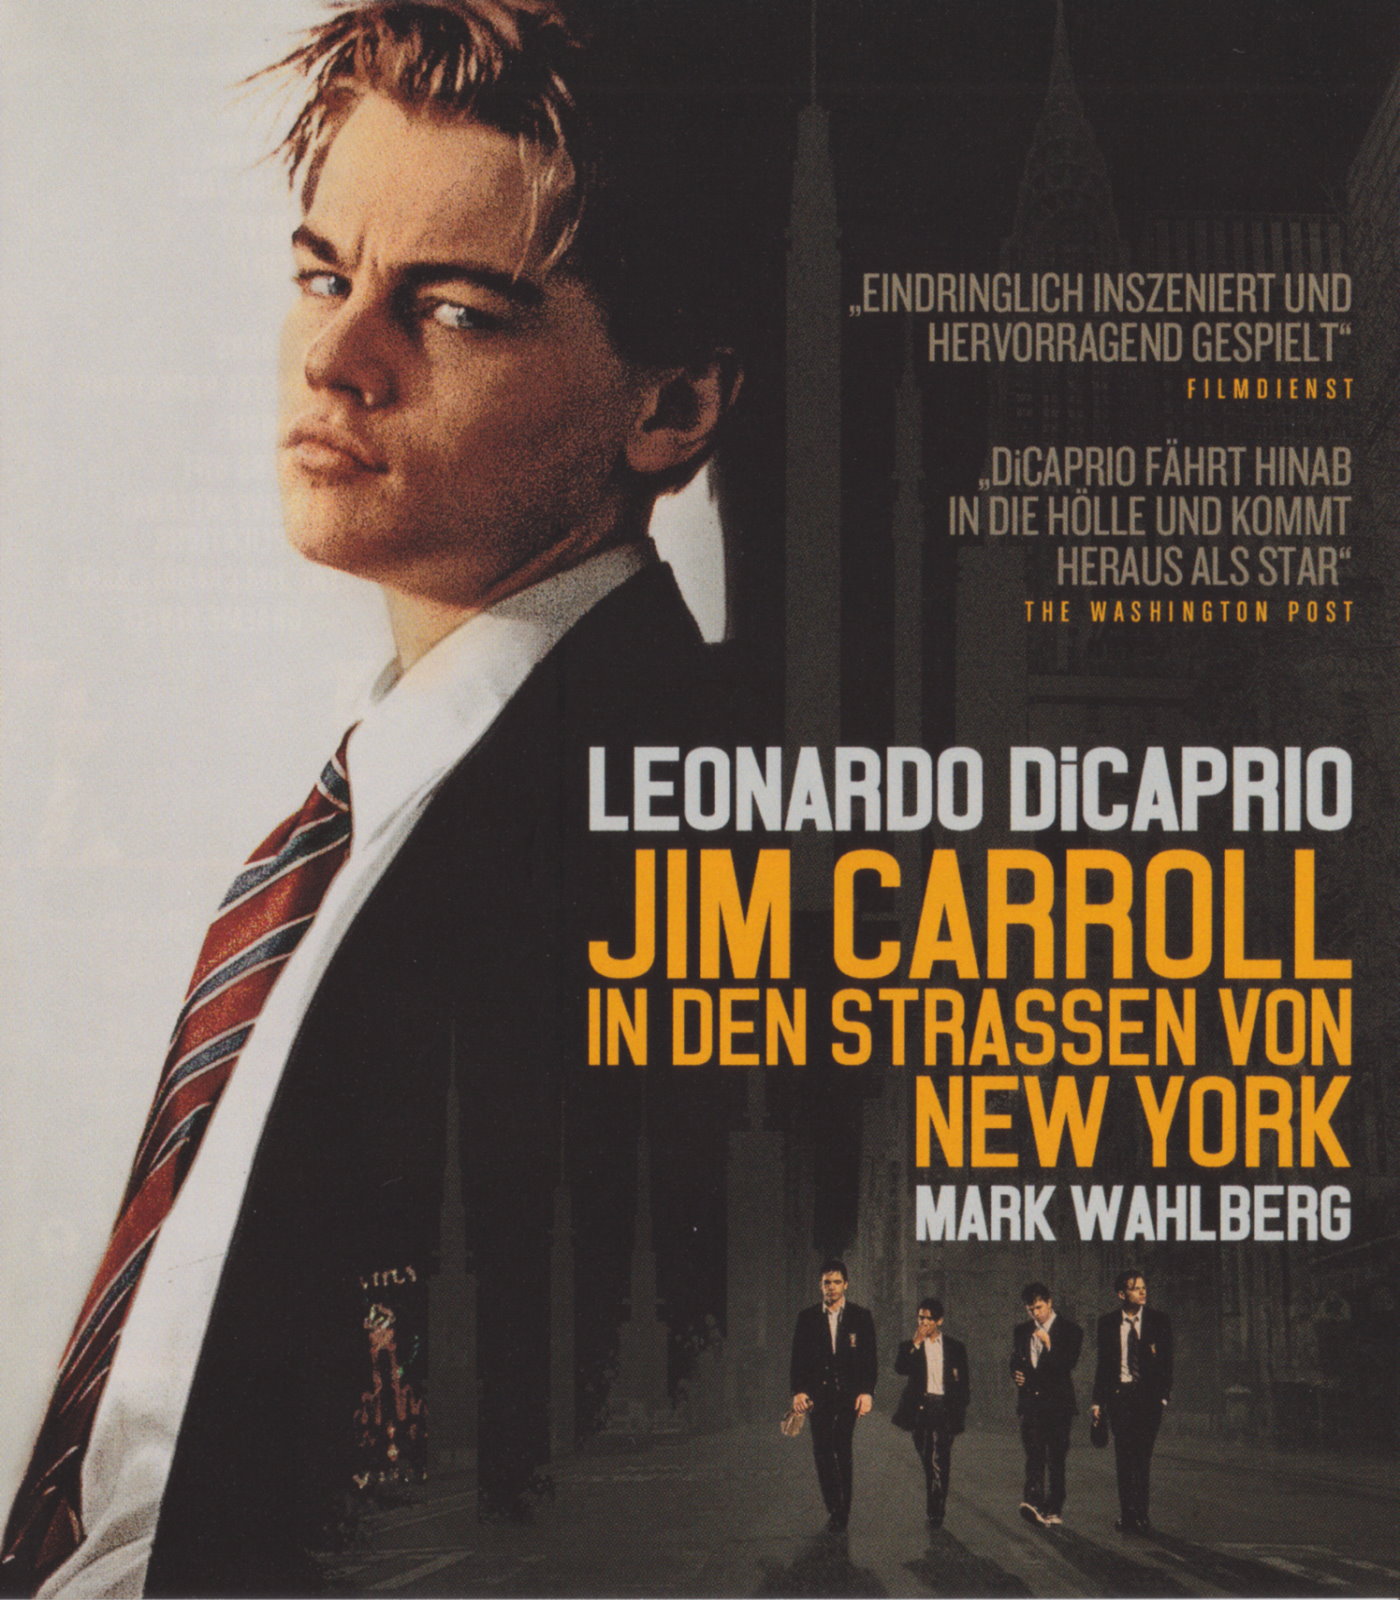 Cover - Jim Carroll - In den Straßen von New York.jpg